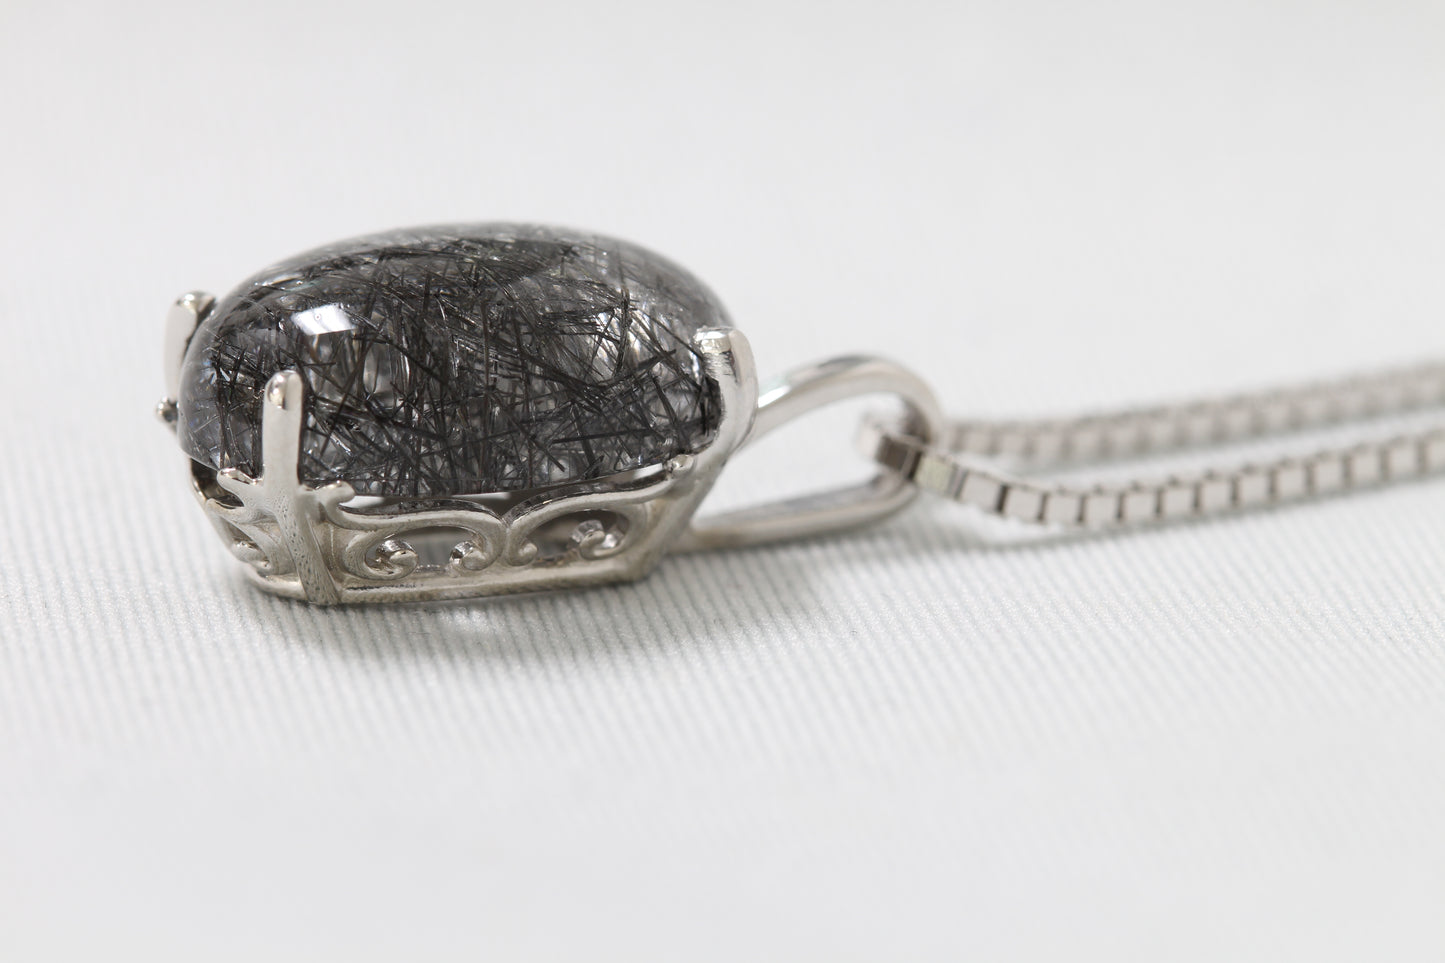 Silver tourmalinated quartz pendant